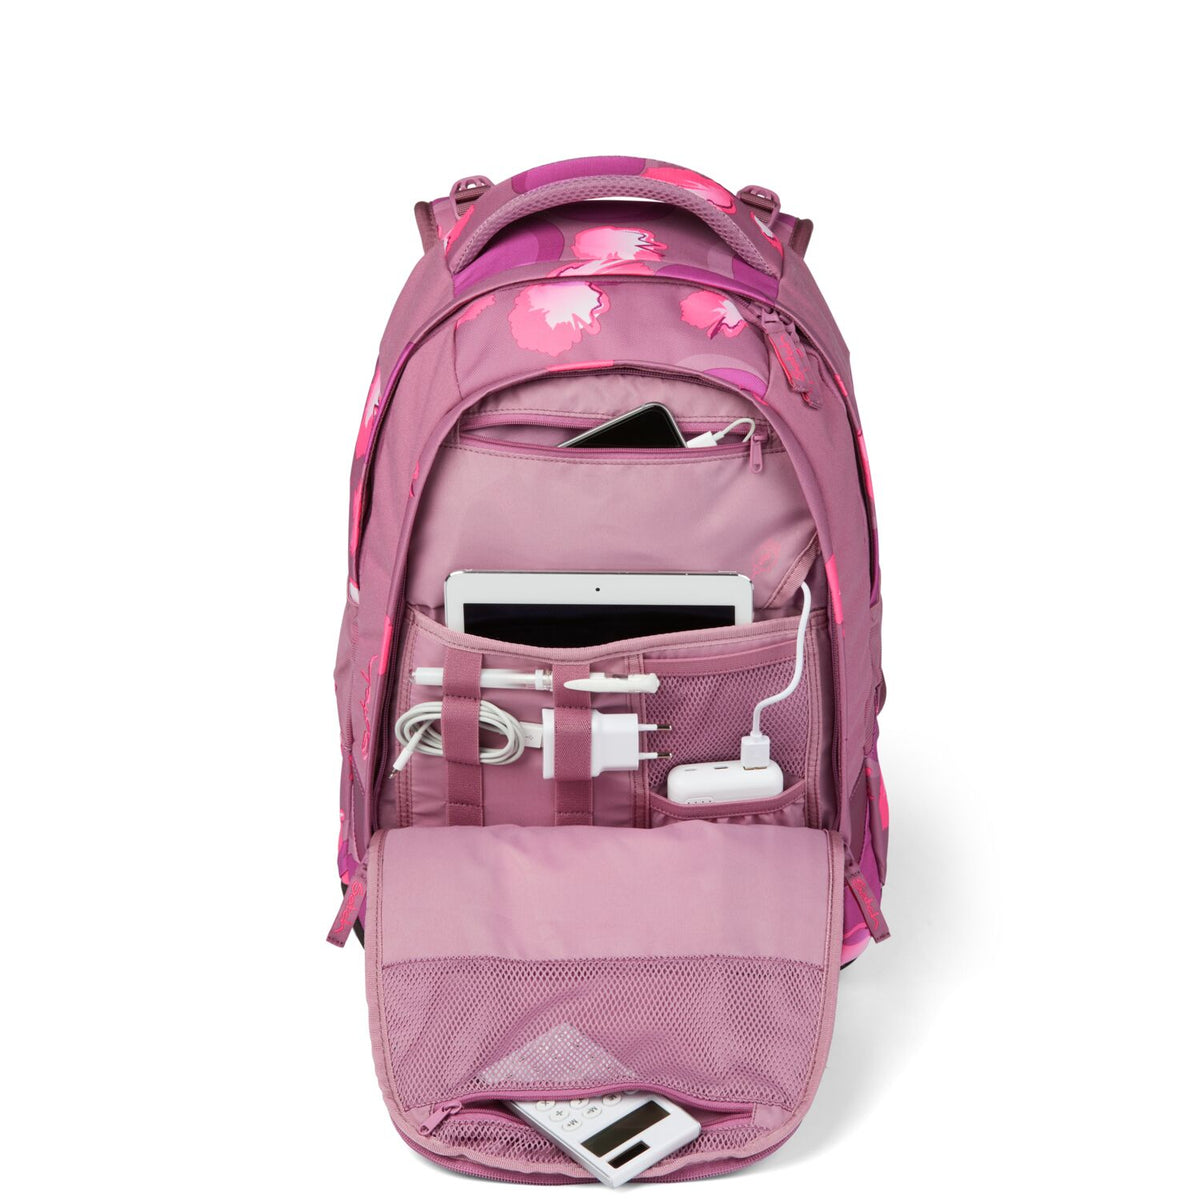 Satch Sleek School Backpack for Teens Girls Satch Sleek